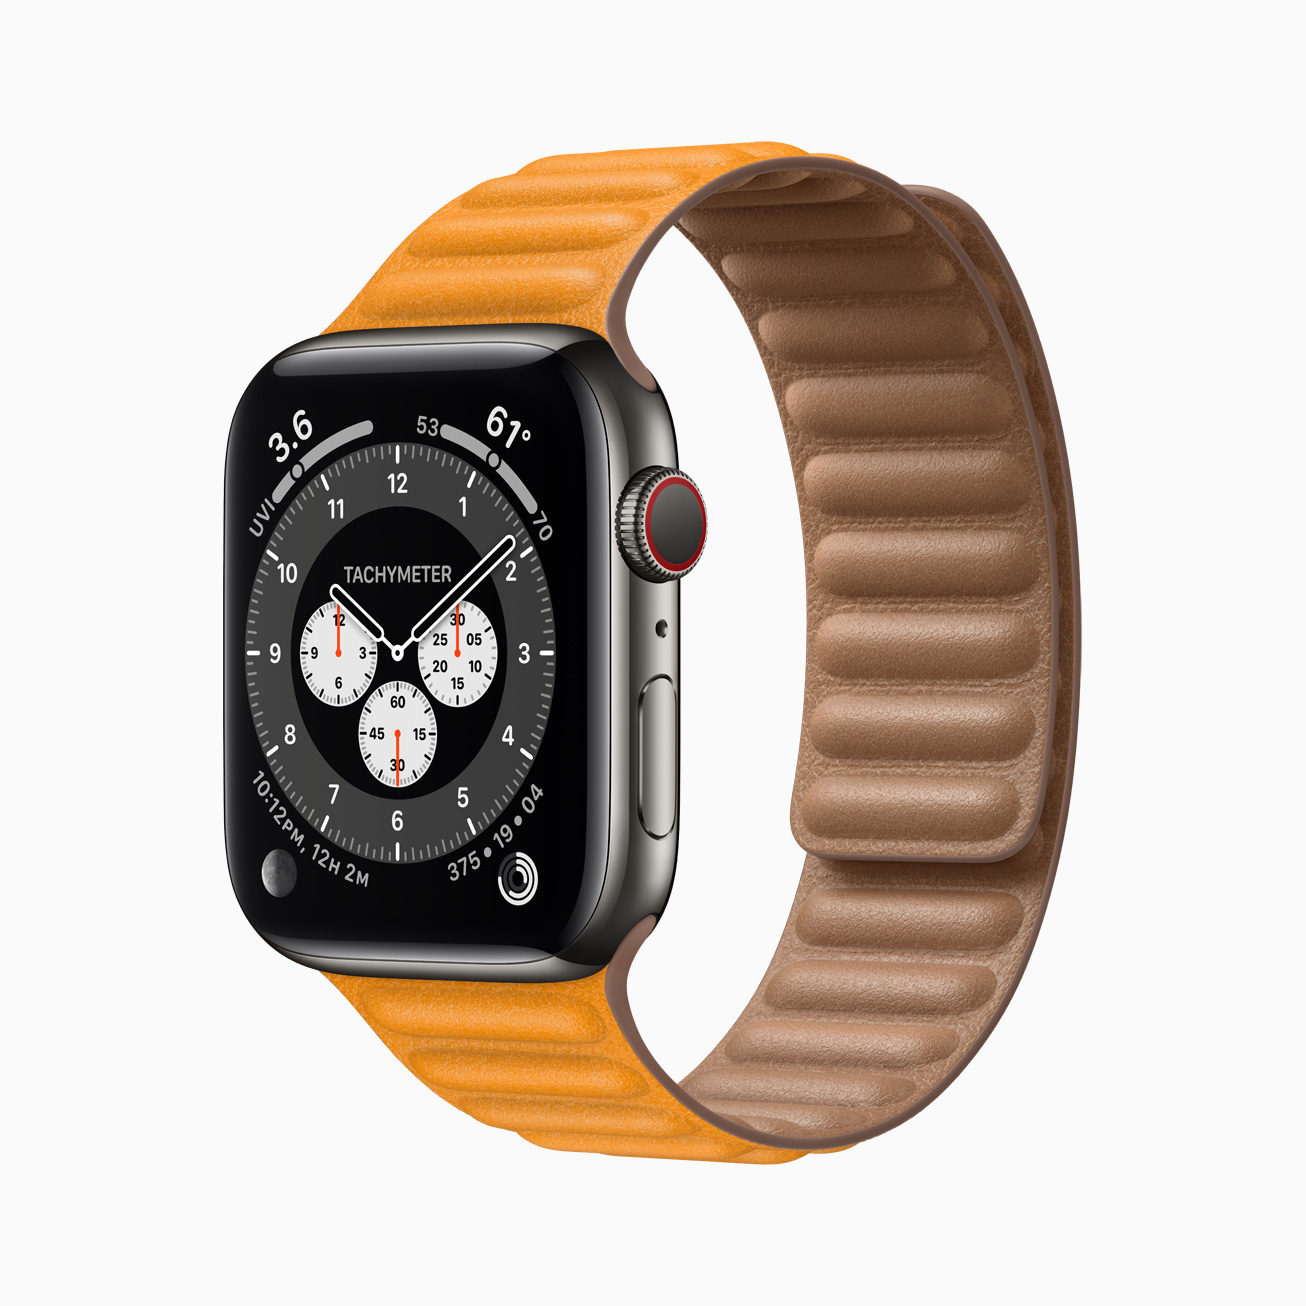 Apple Watch Series 6 带来突破的健康与健身功能 Apple (中国大陆)